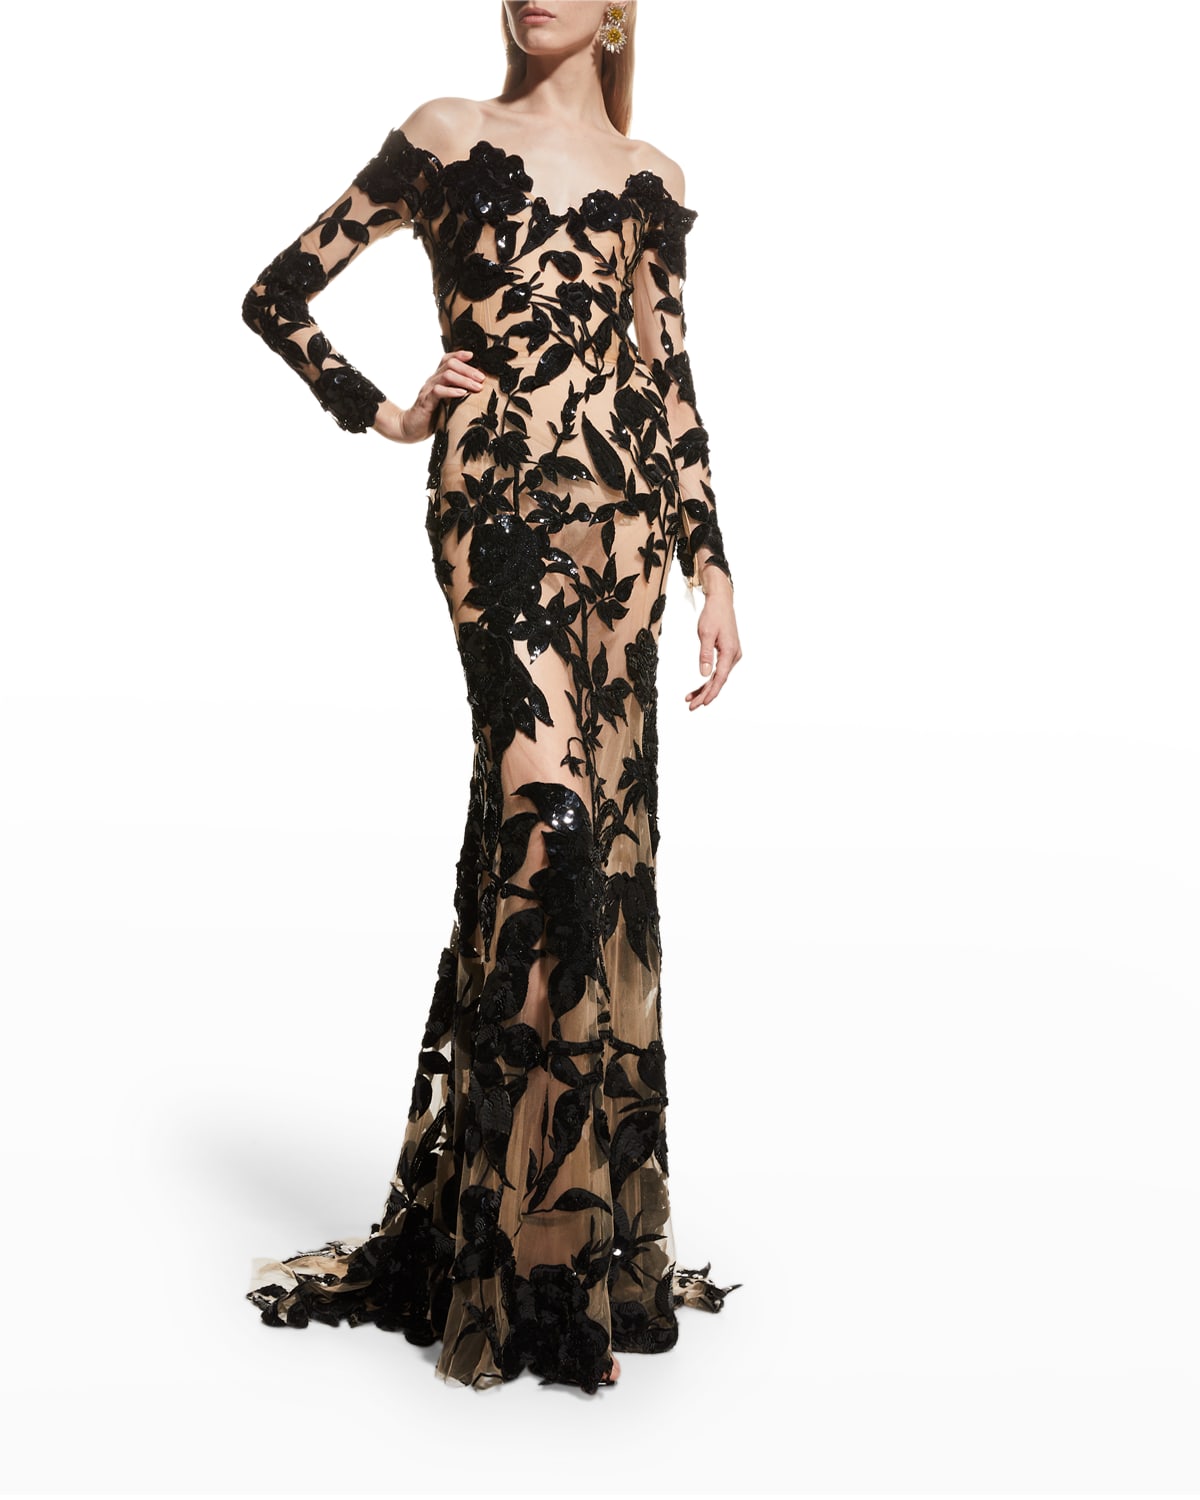 Oscar de la Renta Floral-Sequin Embroidered Evening Gown